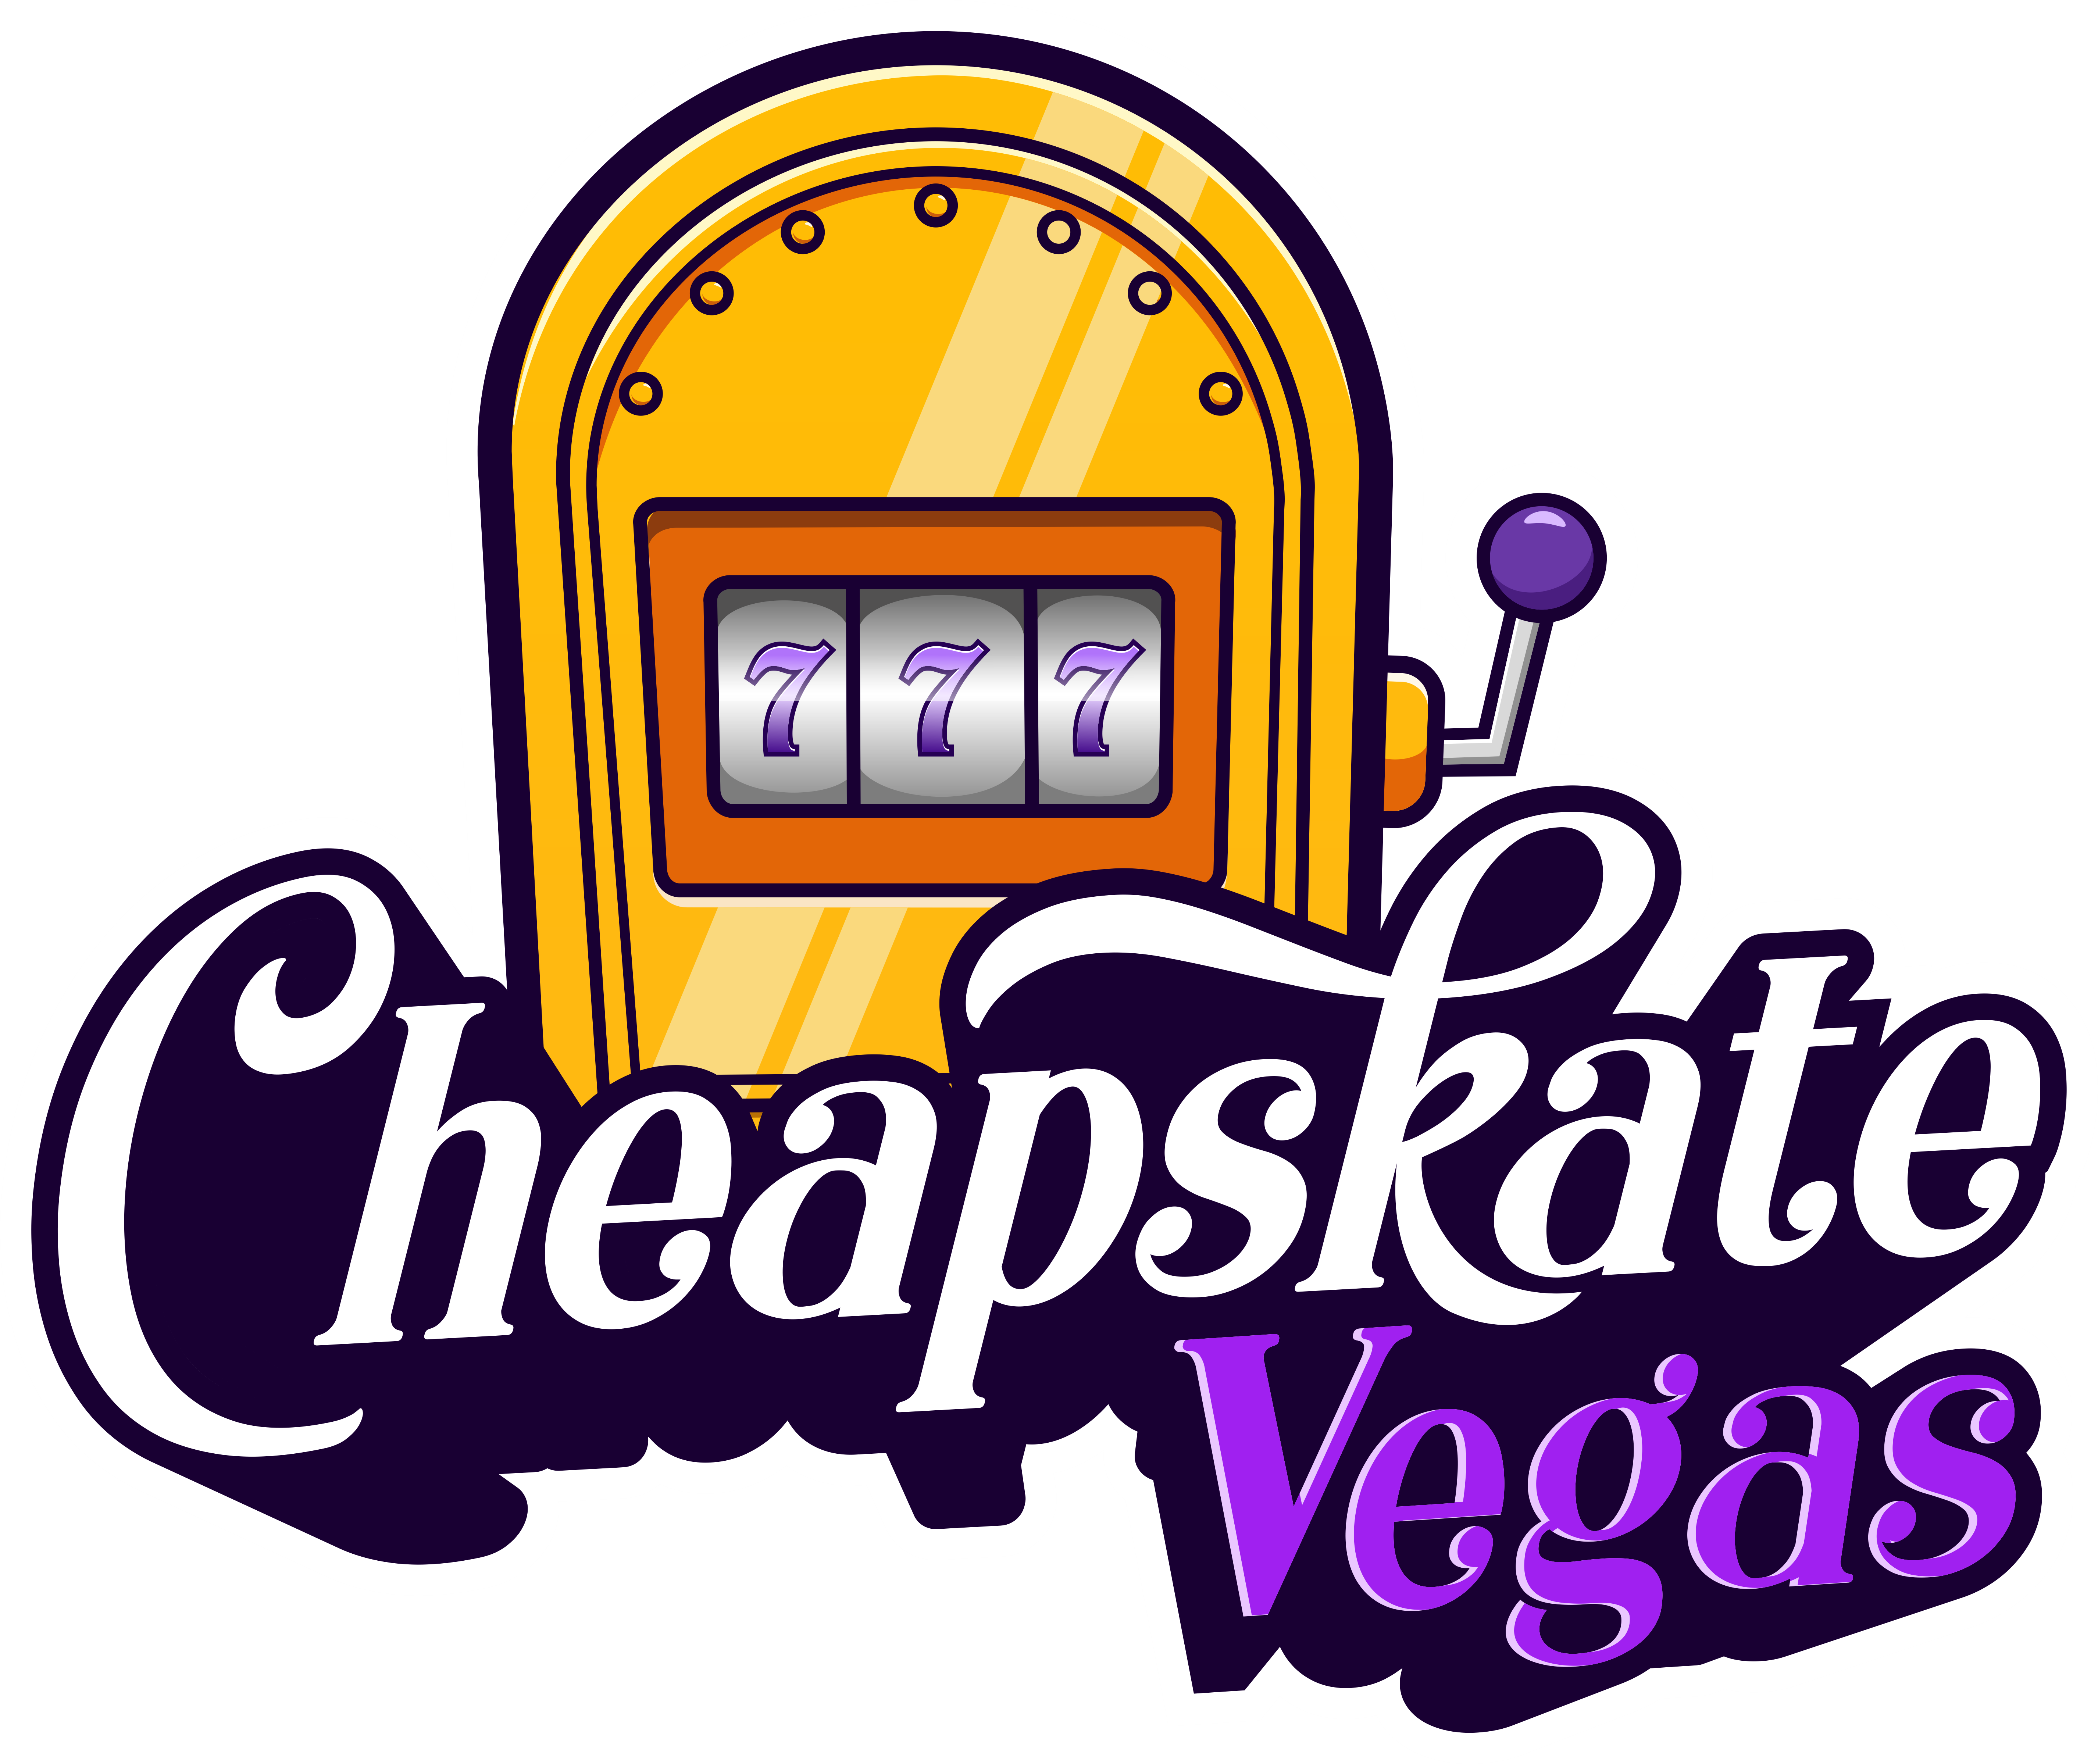 Cheapskate Vegas